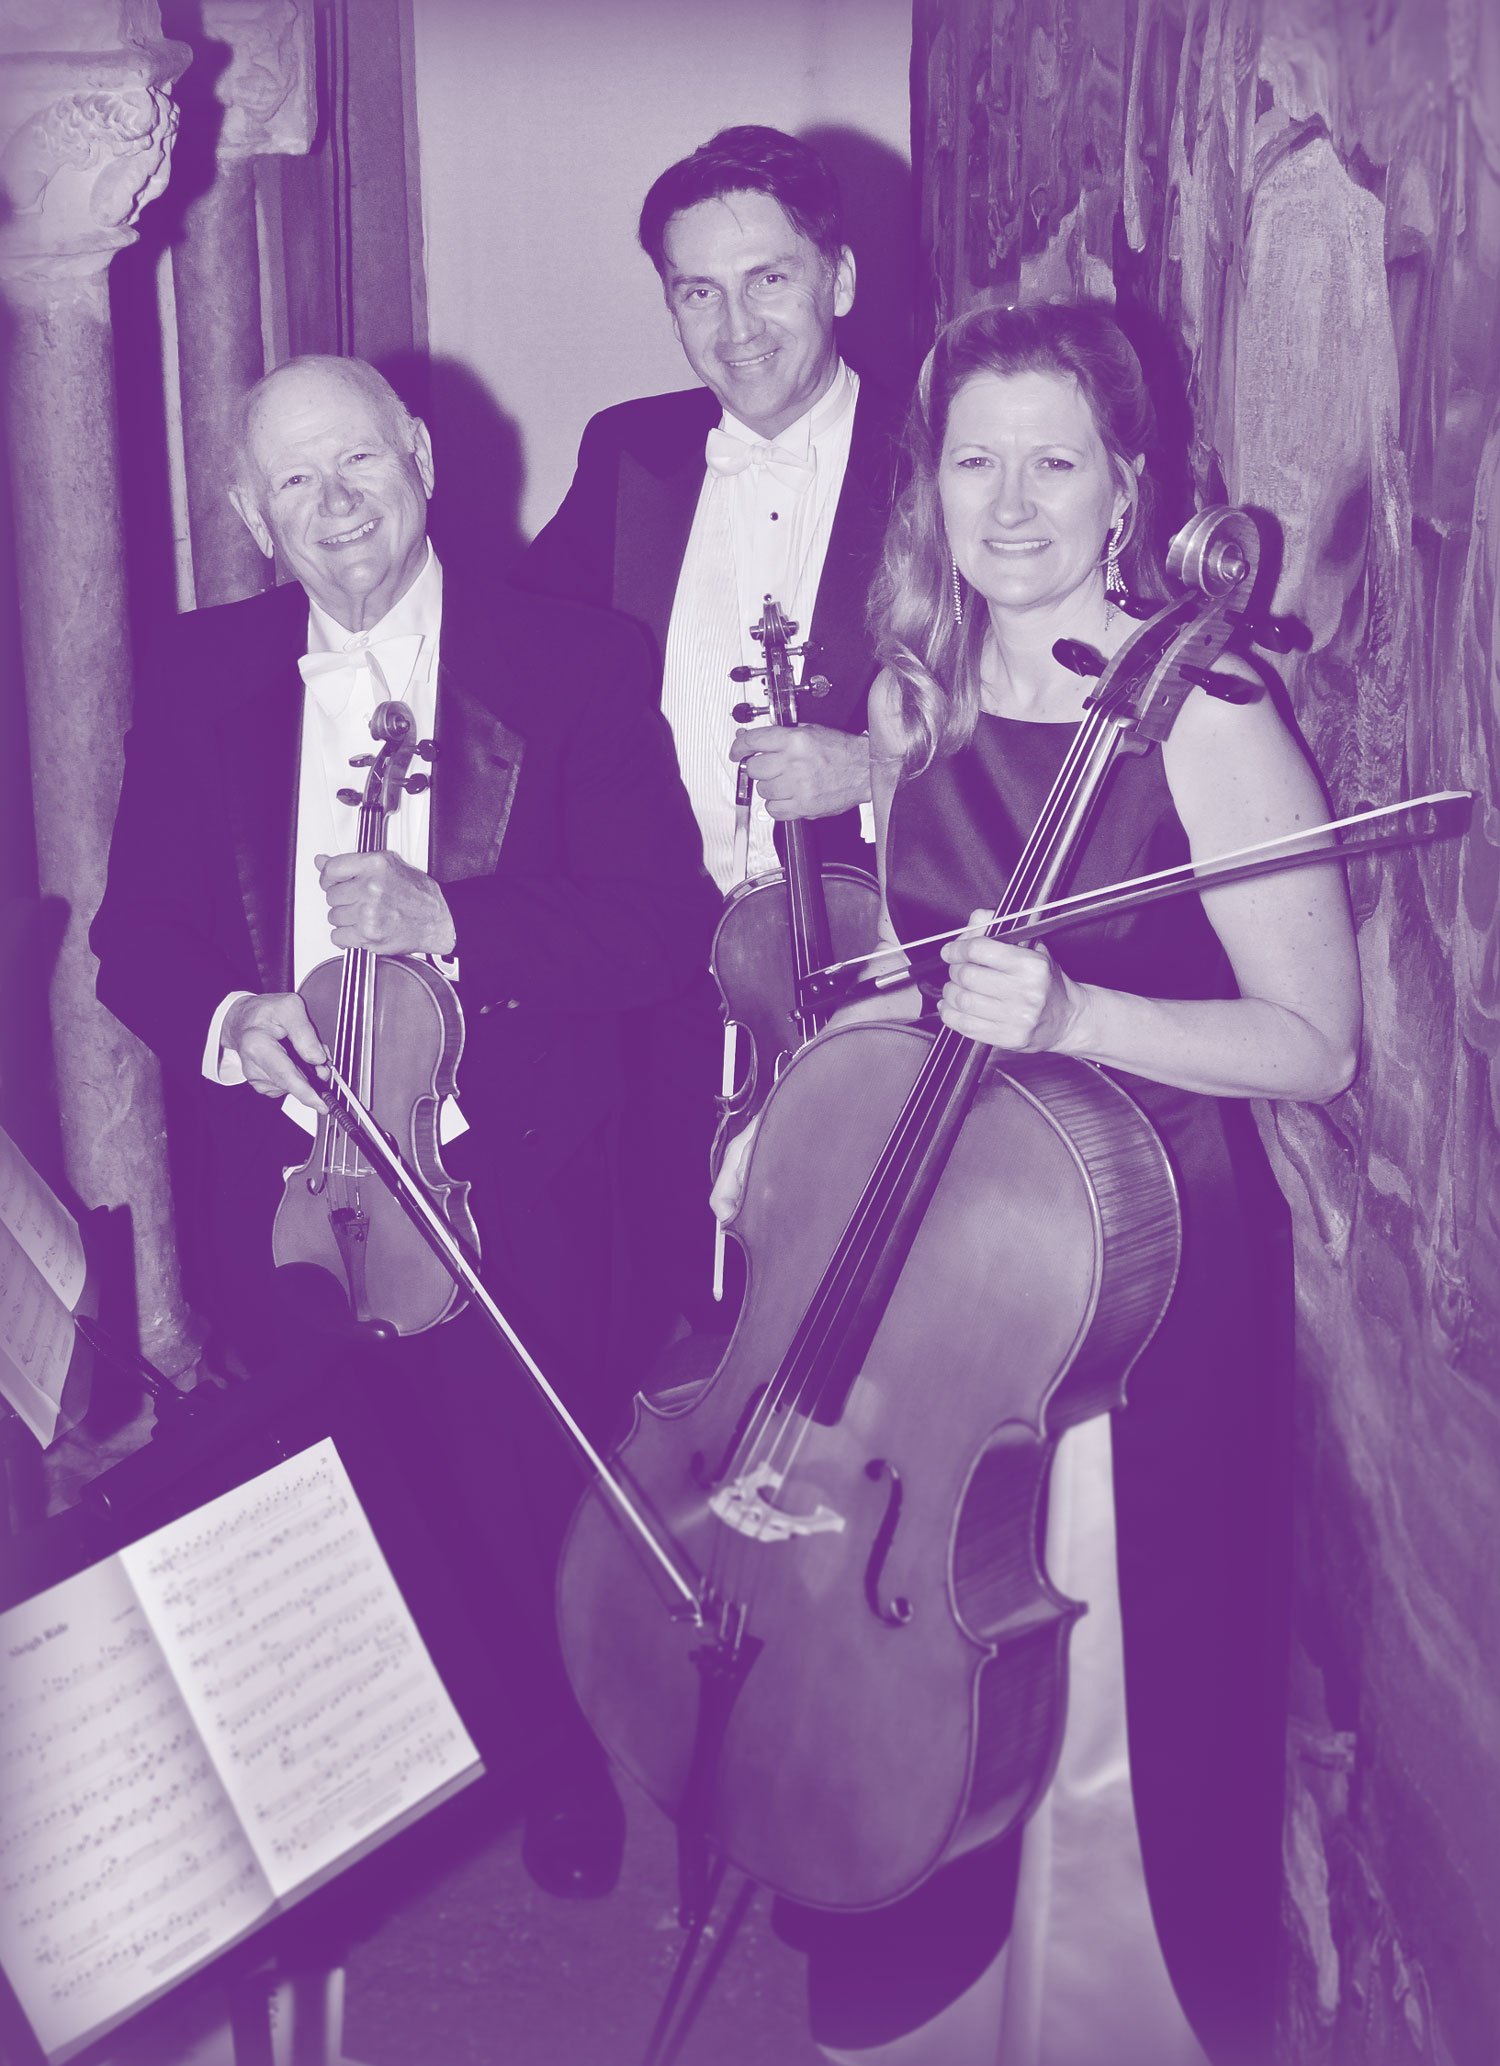 hearst-trio-violin-cello-strings-purple.jpg